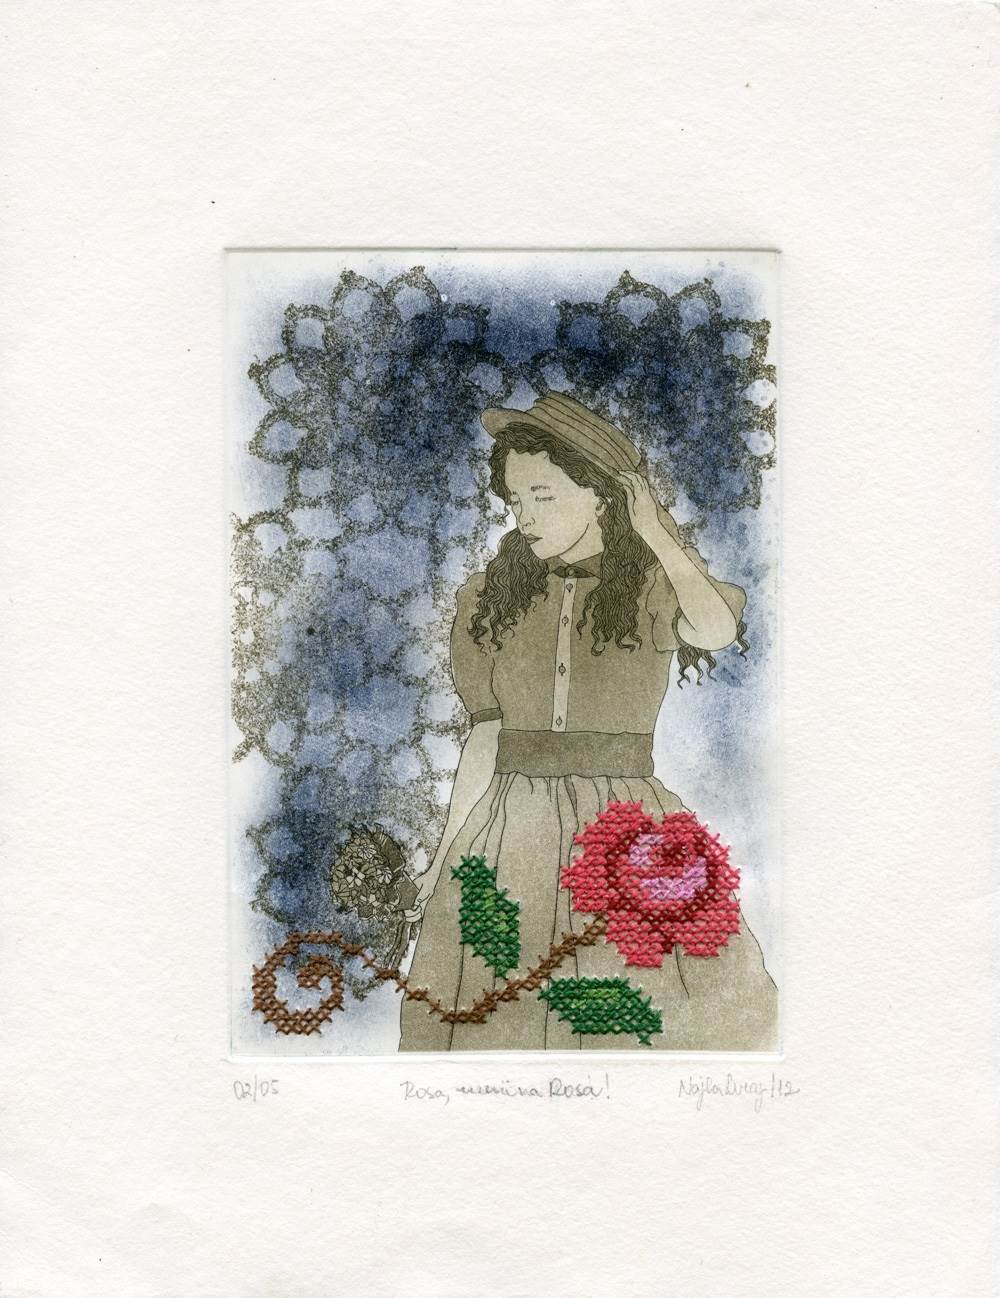 Rosa, menina Rosa!, original Human Figure Engraving Drawing and Illustration by Najla Leroy